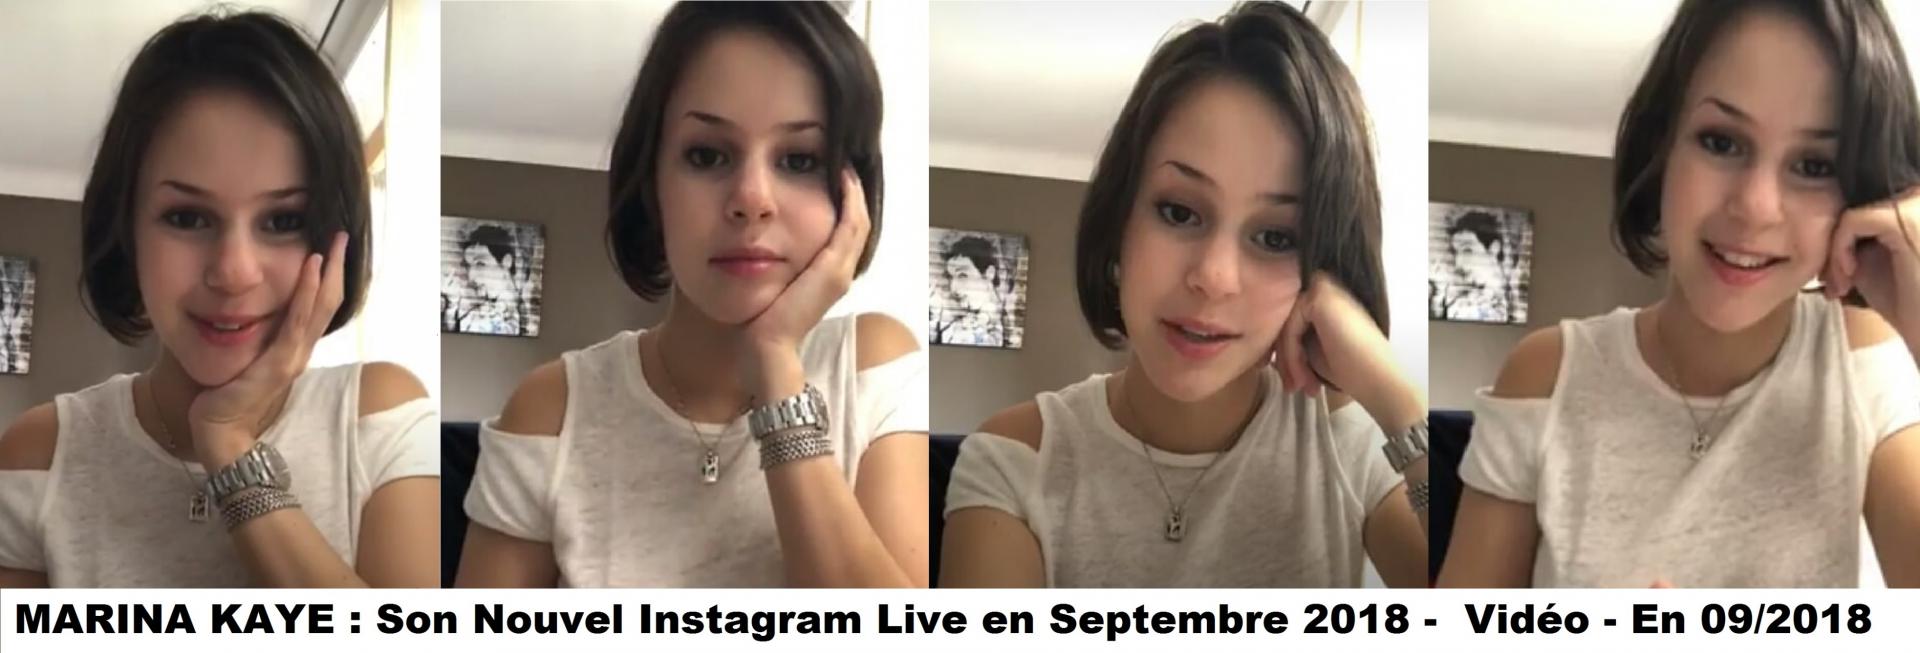 Instagram Live de Marina